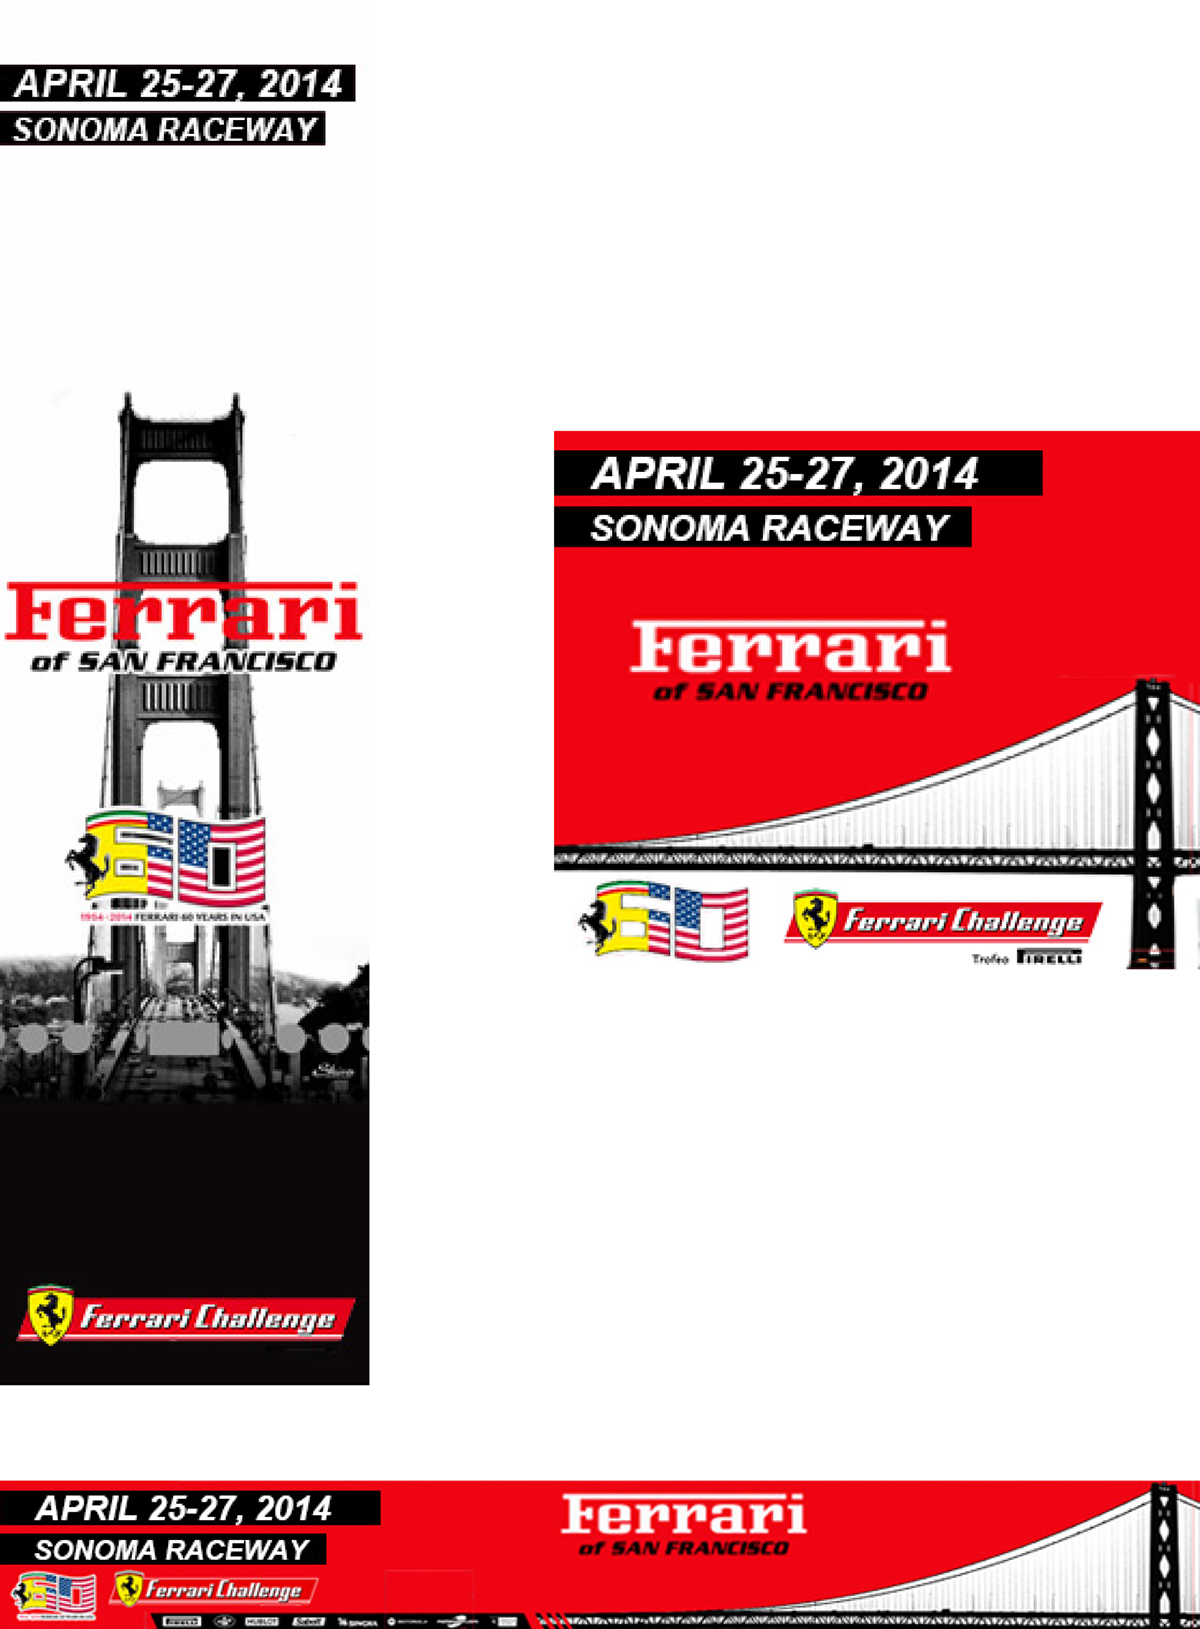 Ferrari of SF Ferrari San Francisco Ferrari Challenge display advertising Network Display